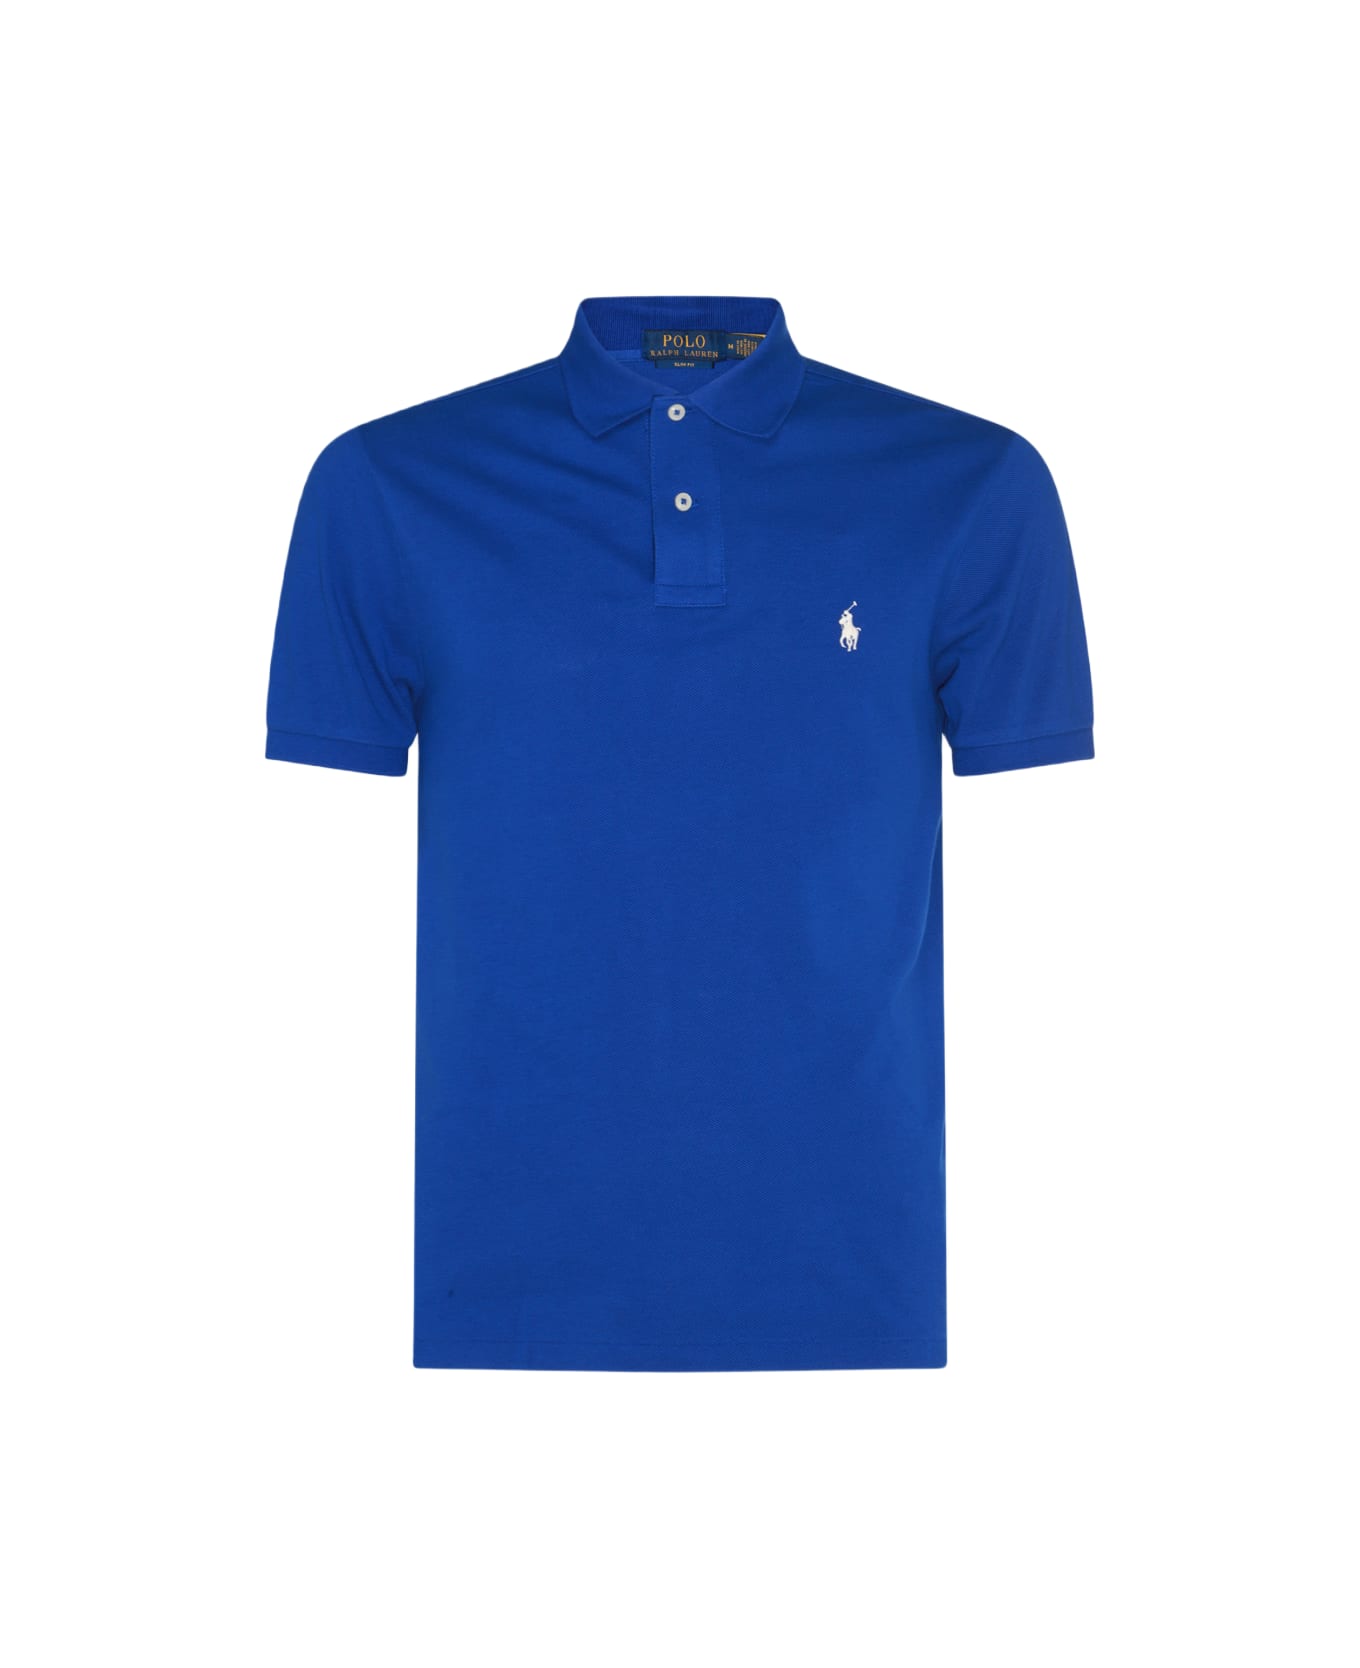 Polo Ralph Lauren Royal Blue And White Cotton Polo Shirt - SAPPHIRE STAR ポロシャツ